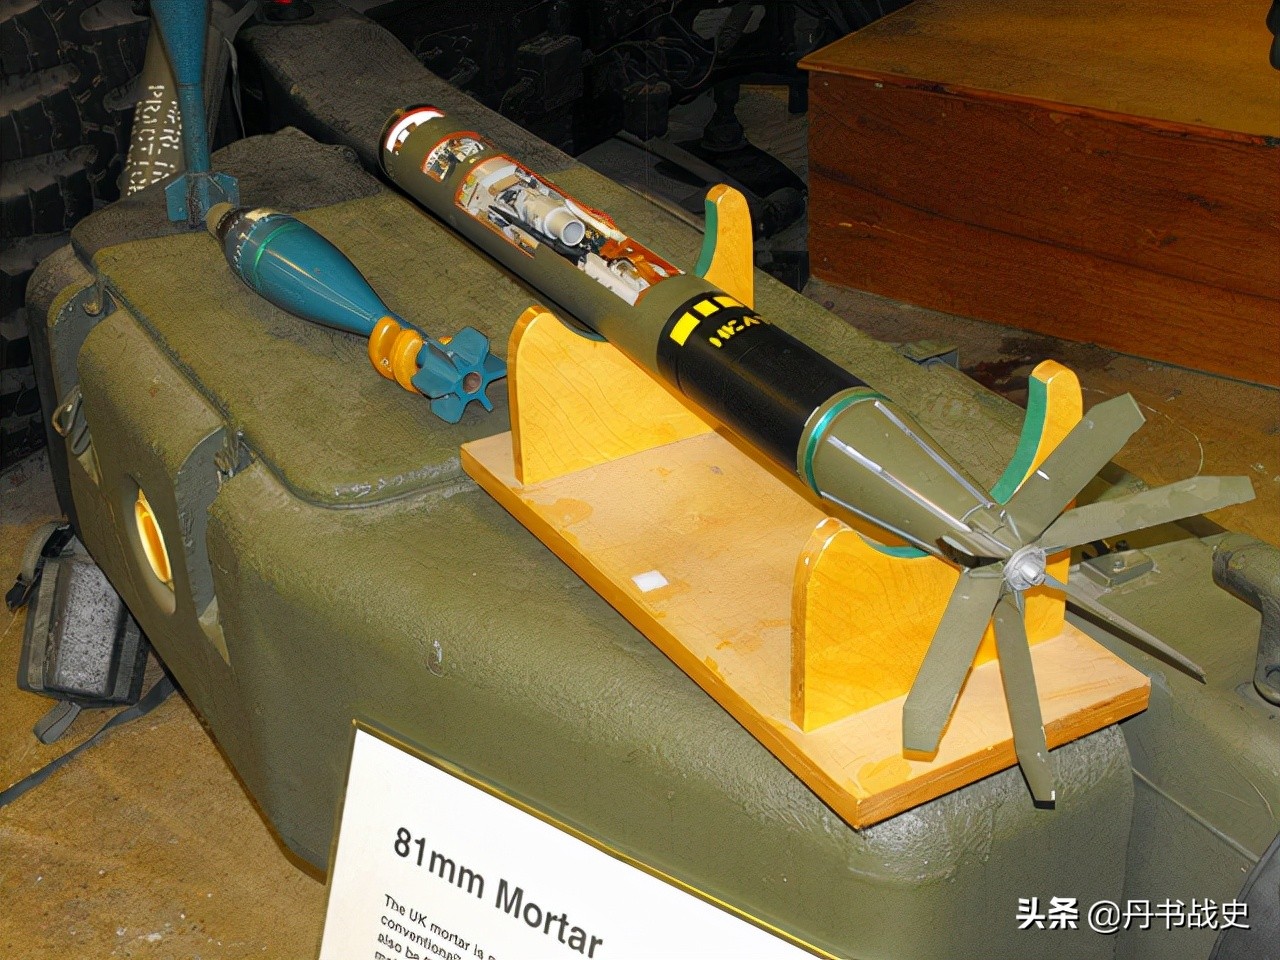 Anti-tank with mortar, British Merlin 81mm anti-tank mortar shell